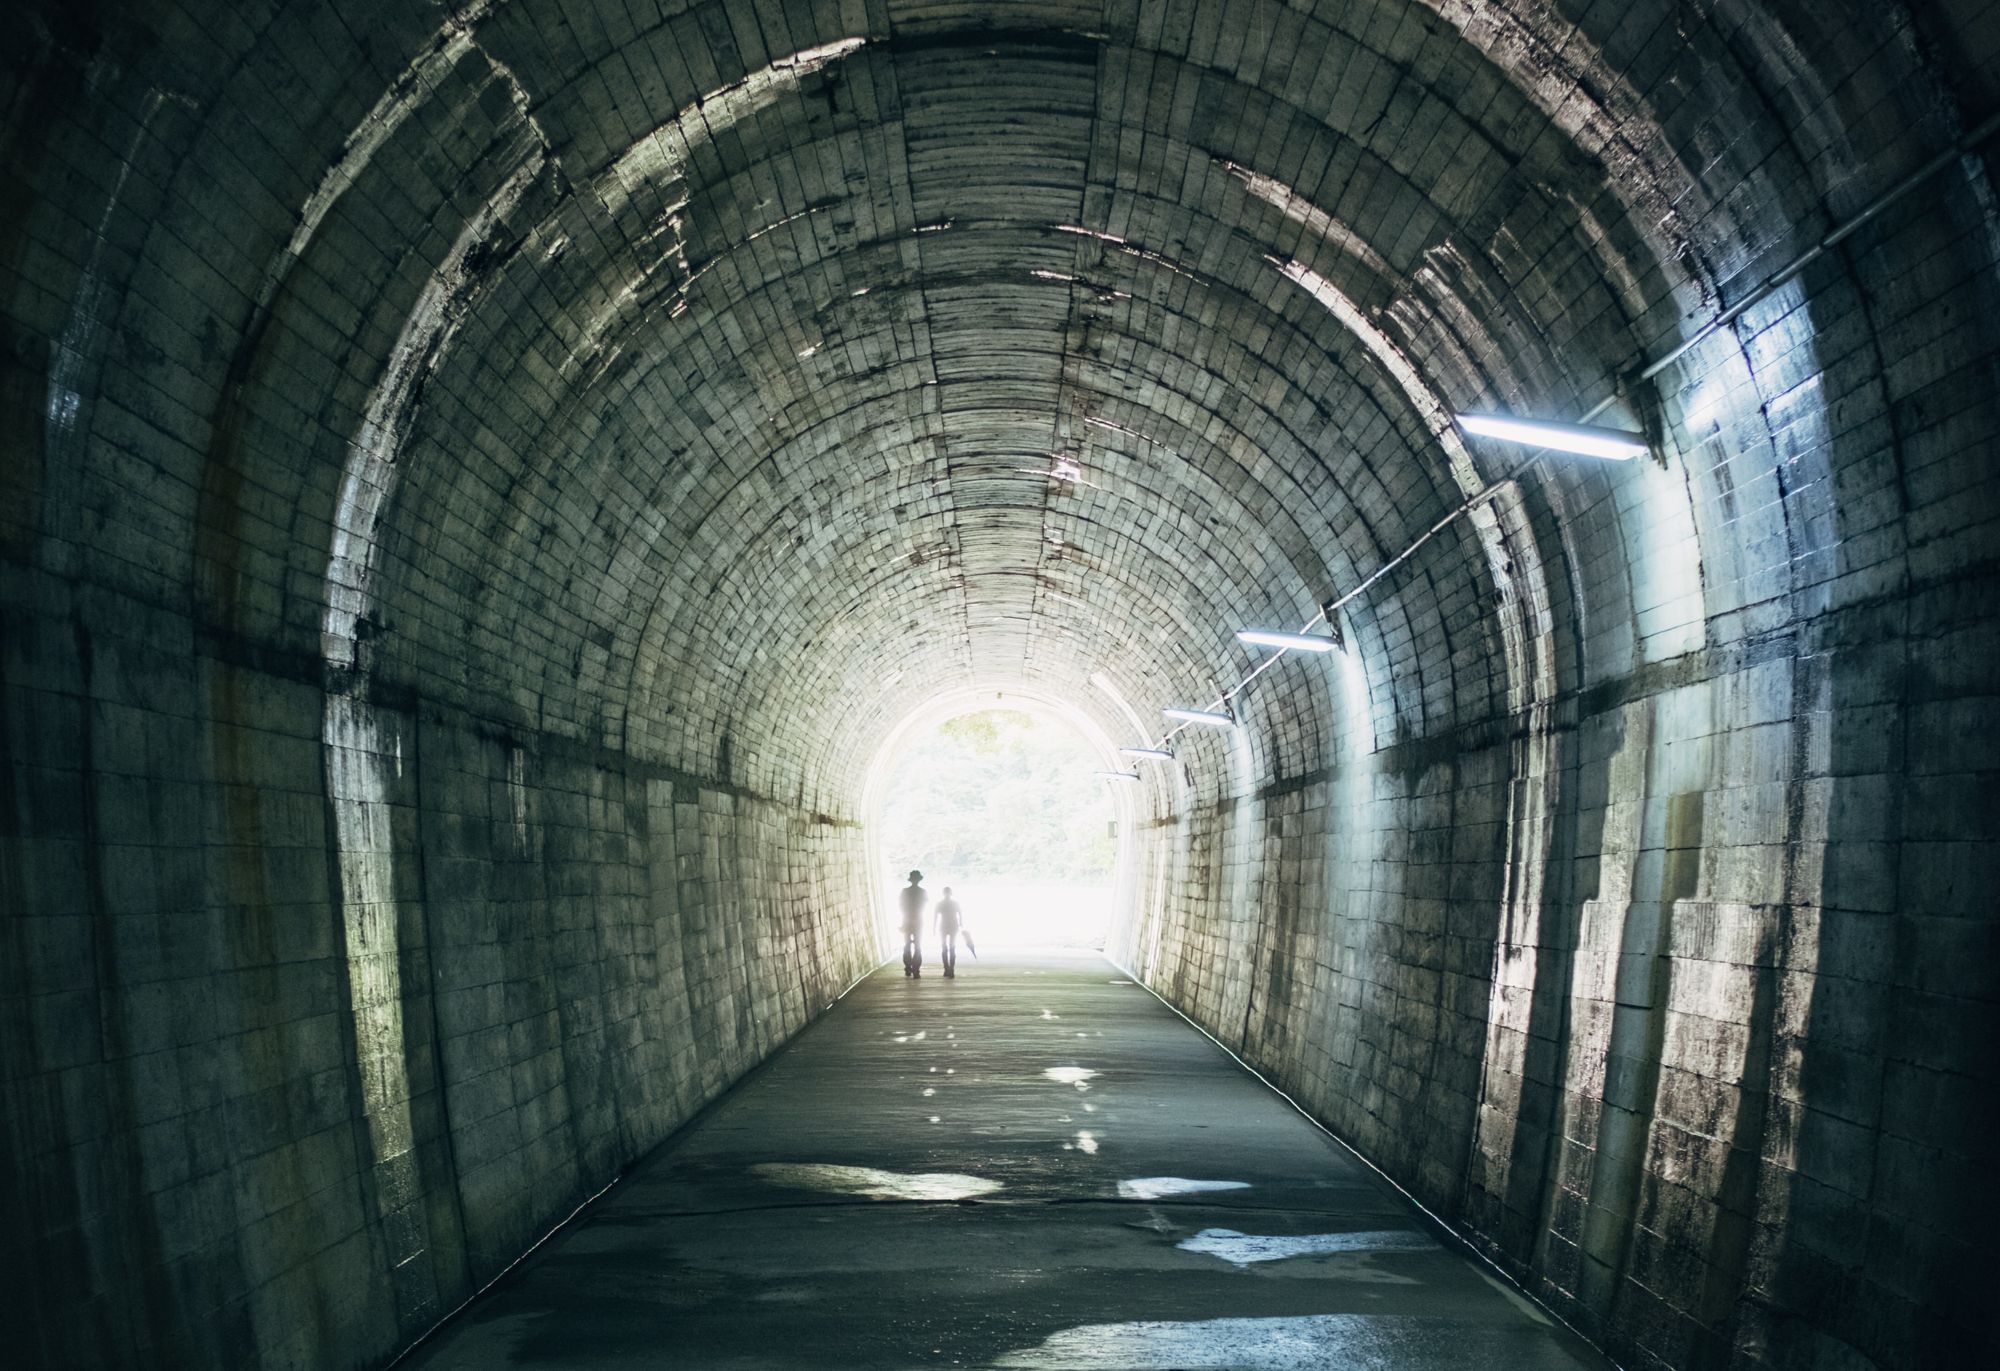 La salida al final del túnel